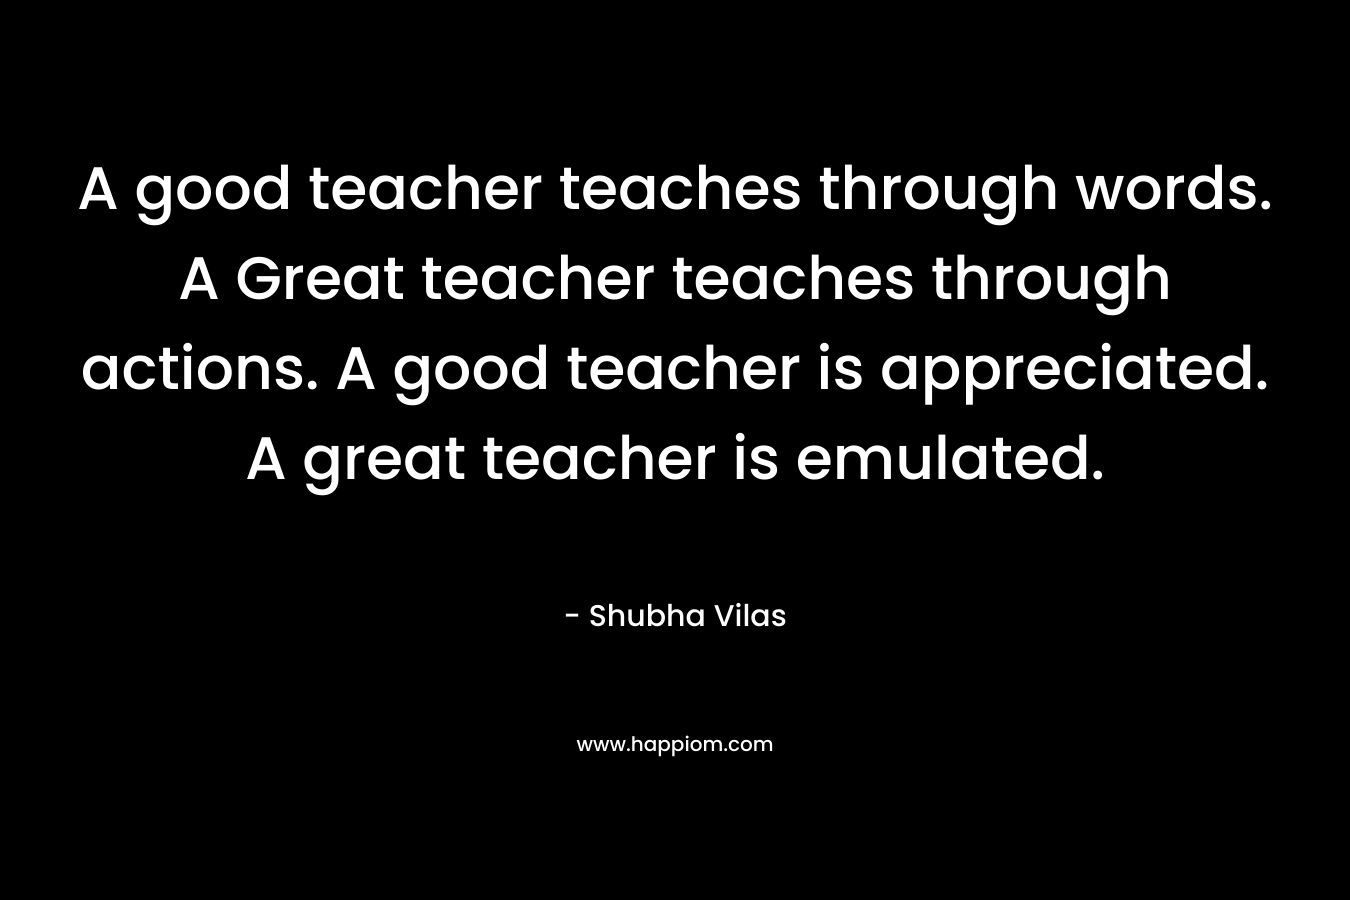 A good teacher teaches through words. A Great teacher teaches through actions. A good teacher is appreciated. A great teacher is emulated.